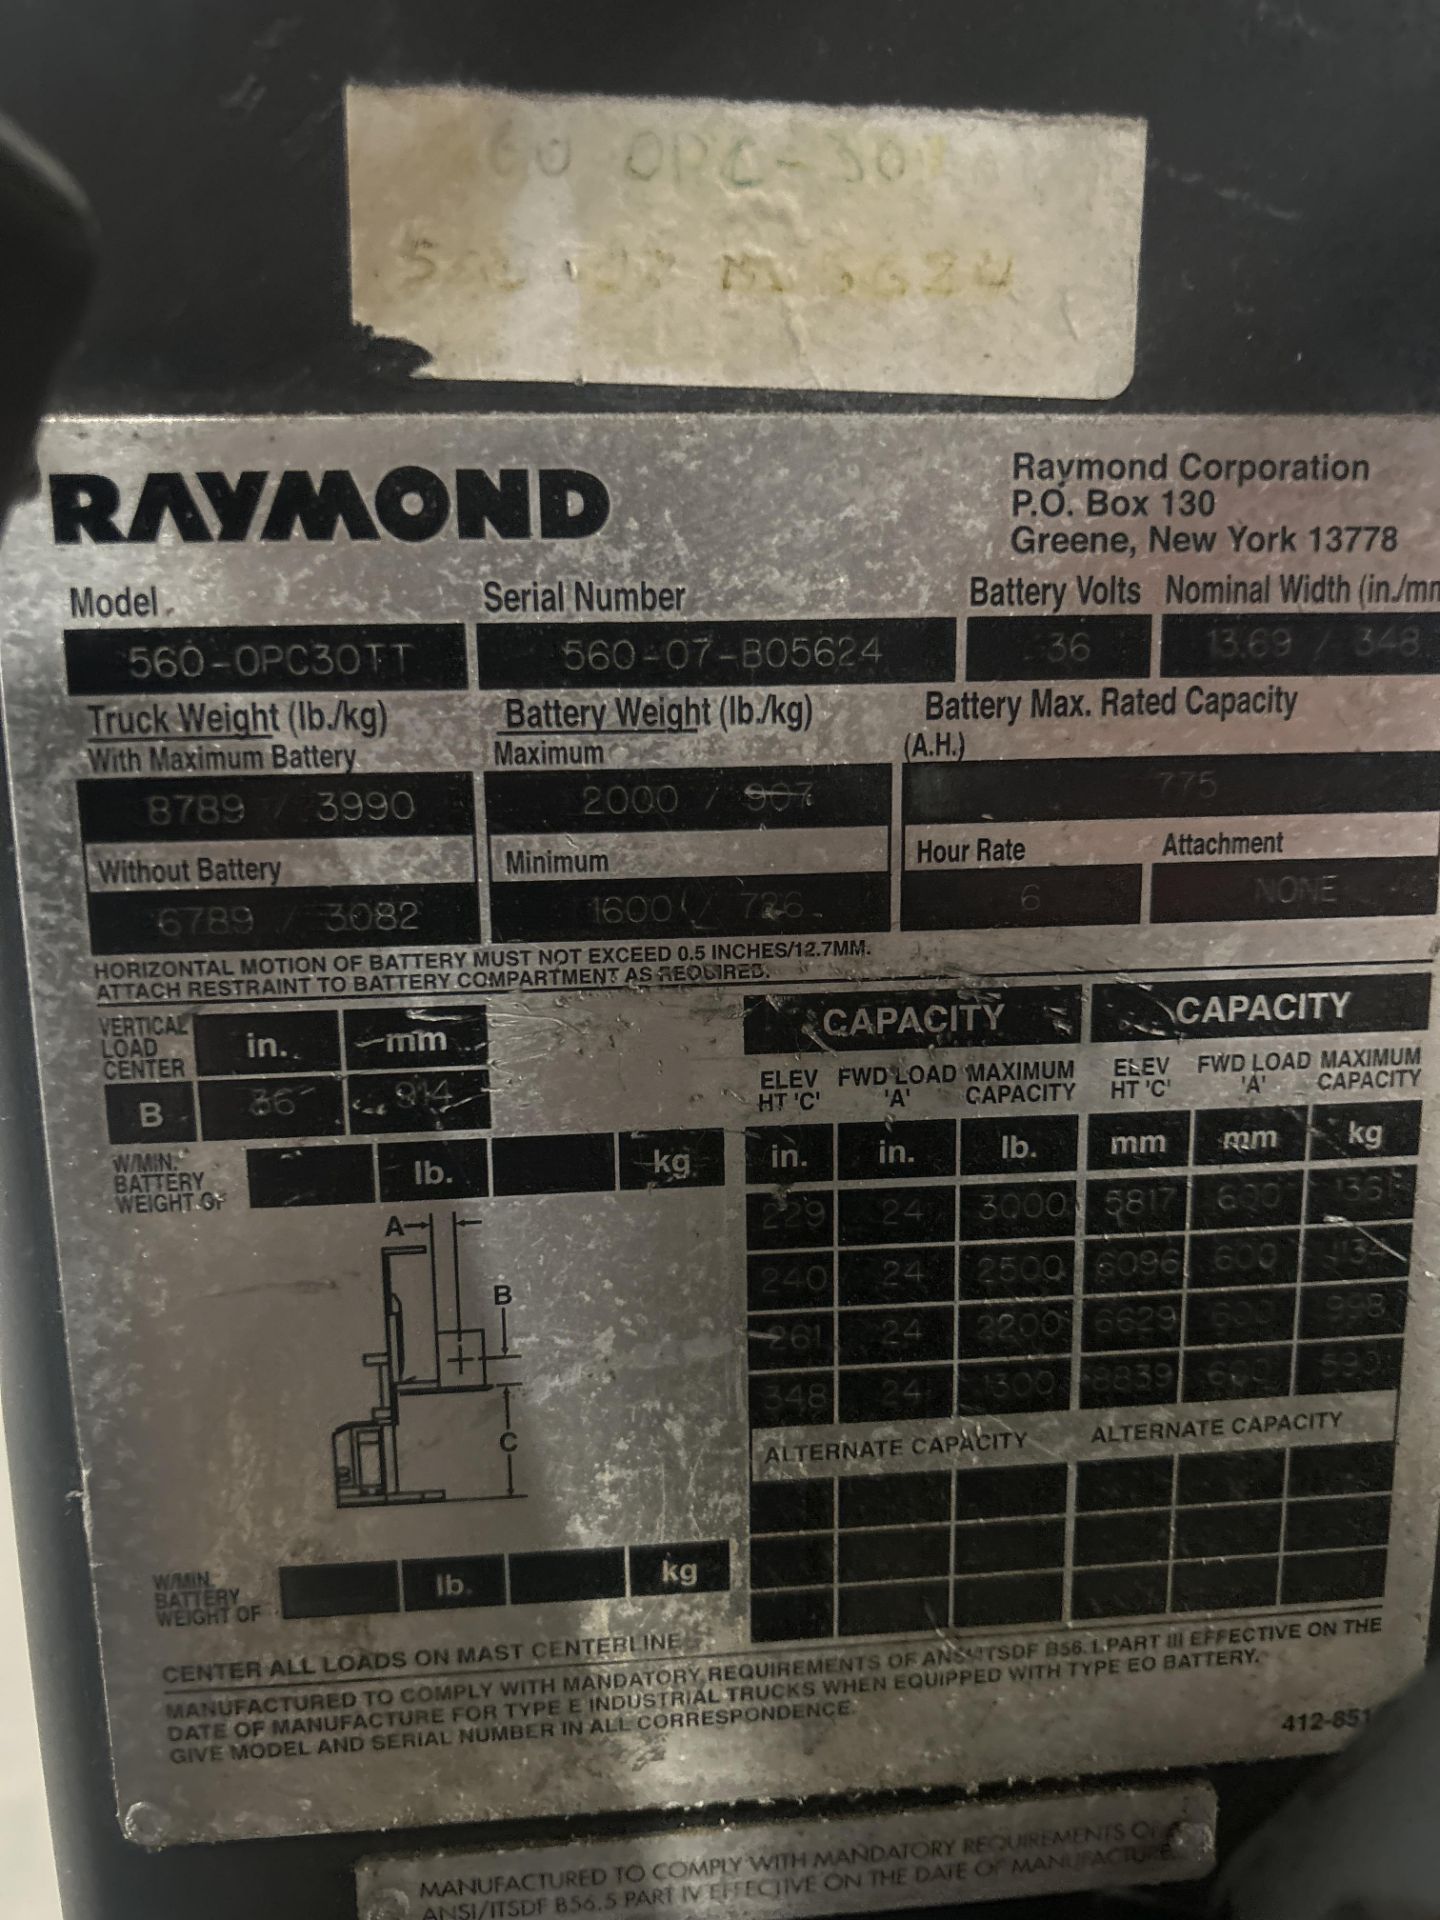 Wire Guided Raymond Order Picker Model 560-OPC30TT - Image 4 of 4